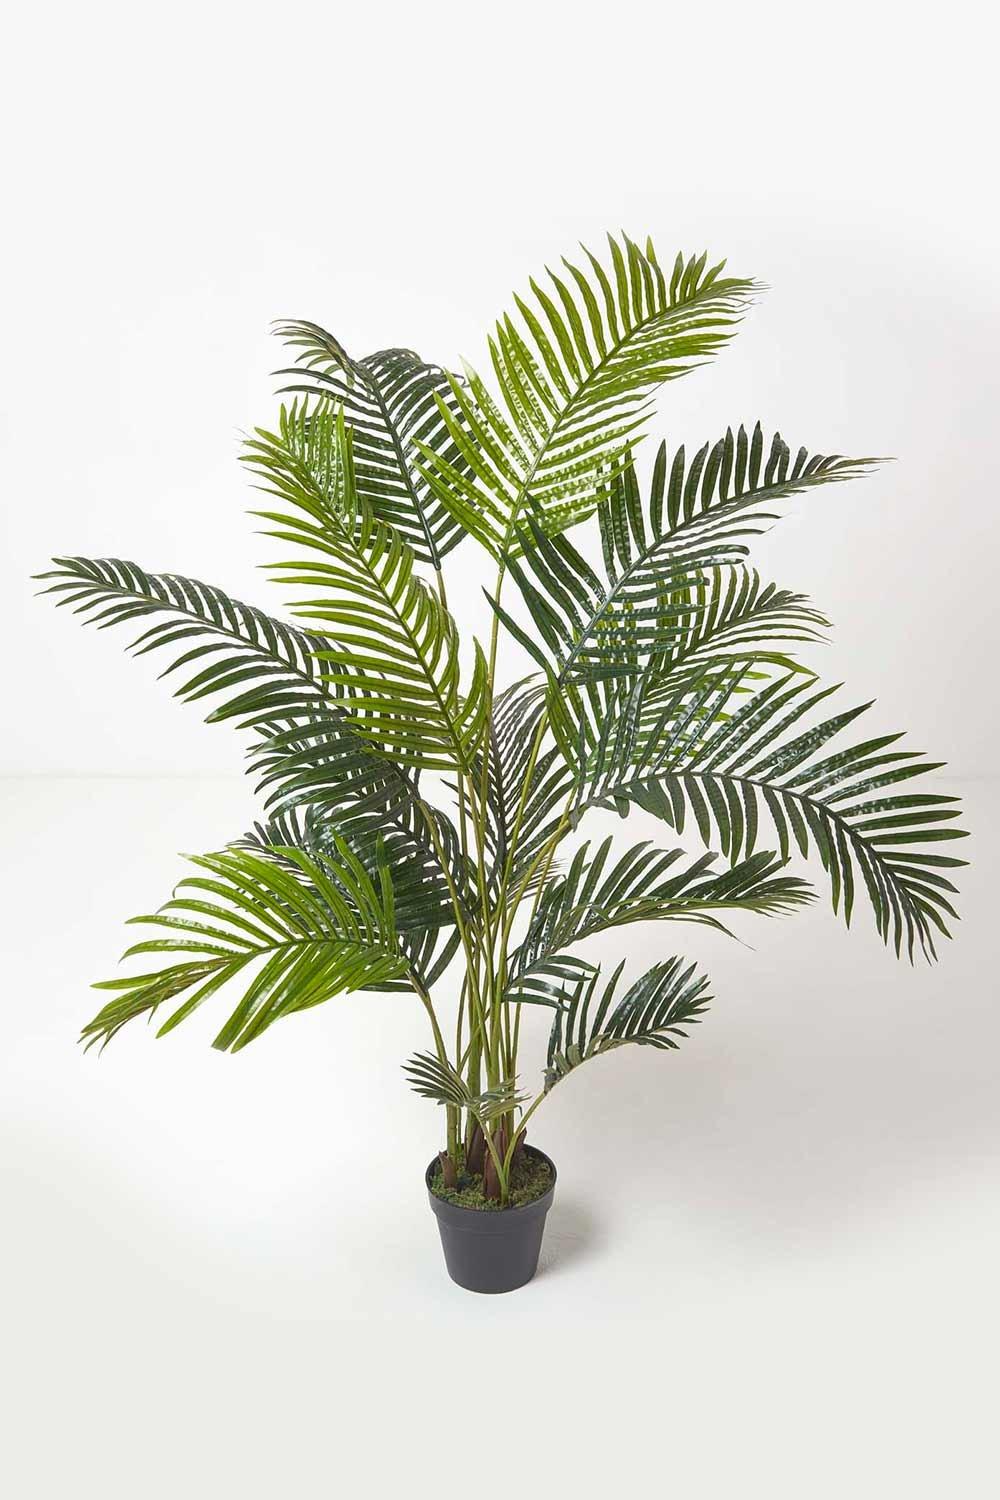 Areca Palm Tree in Pot, 160 cm Tall